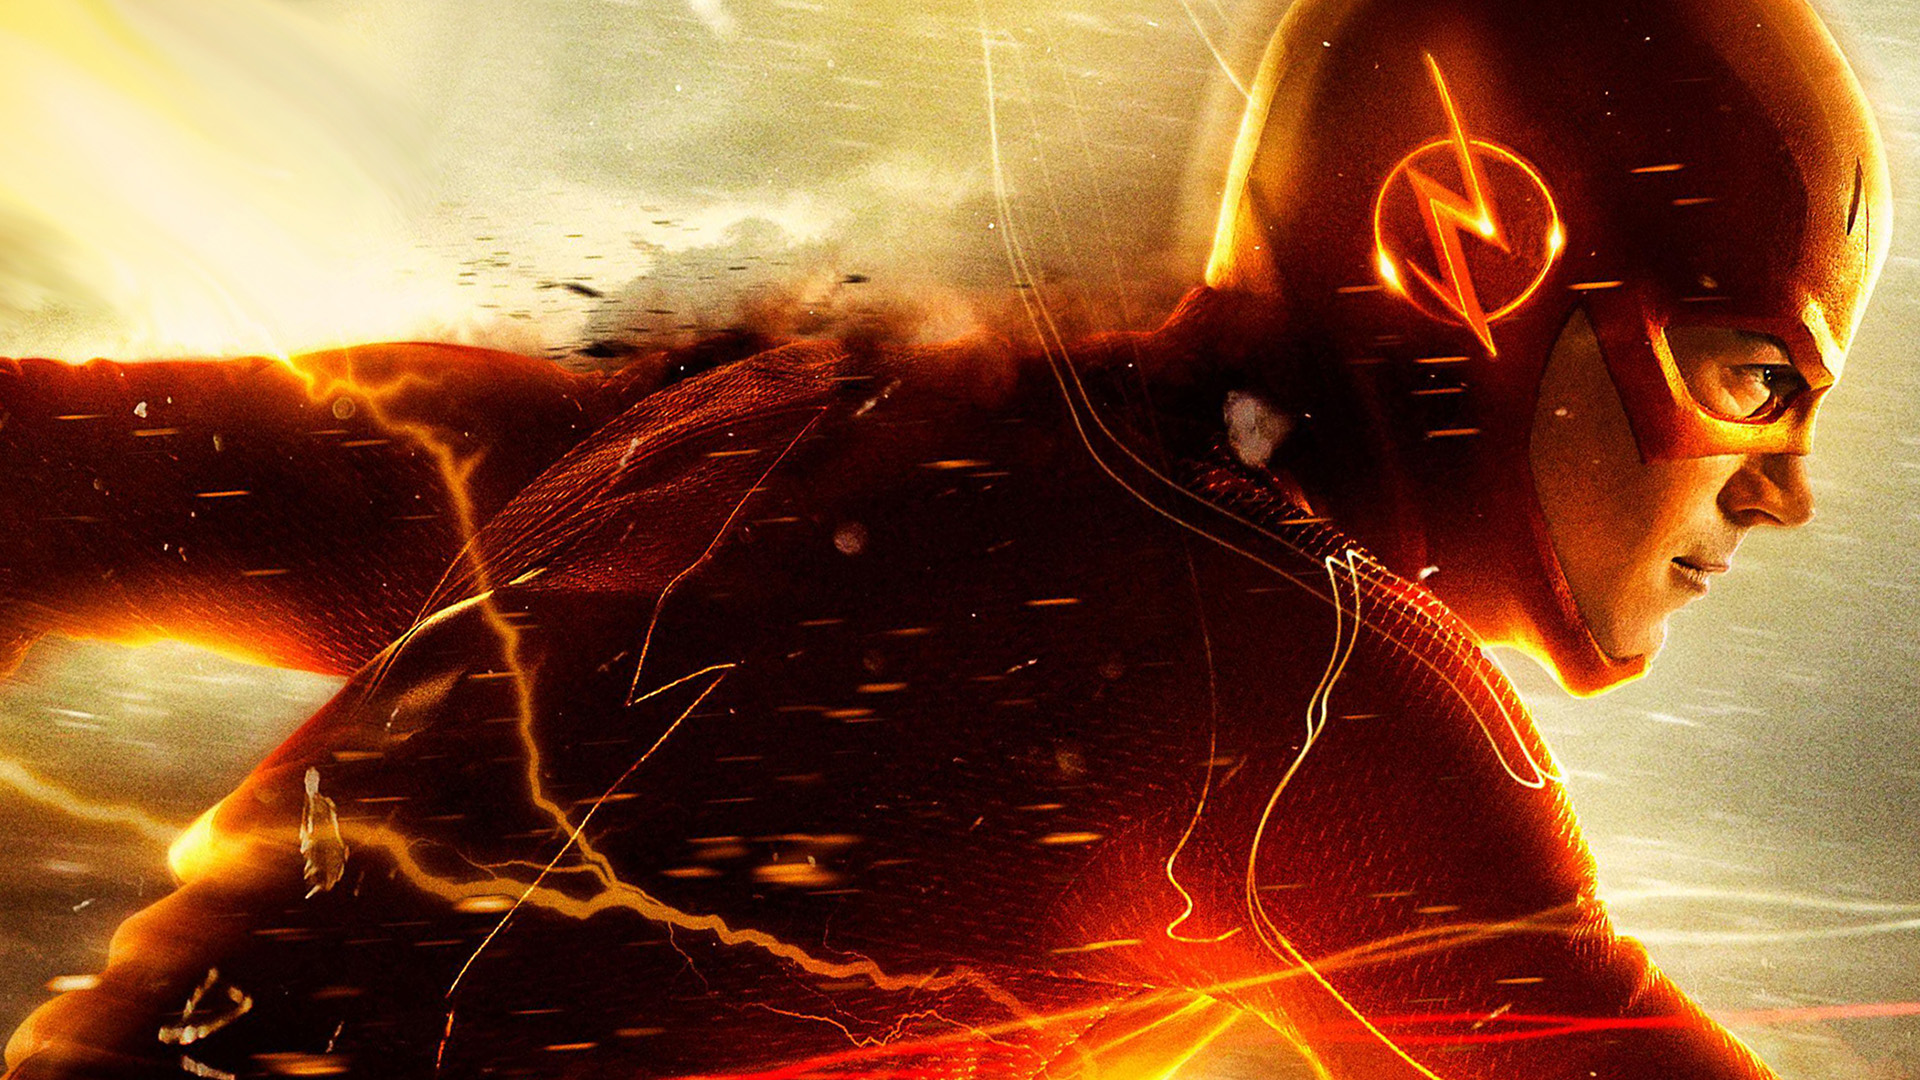 Barry Allen Grant Gustin The Flash 2014 Flash 1920x1080